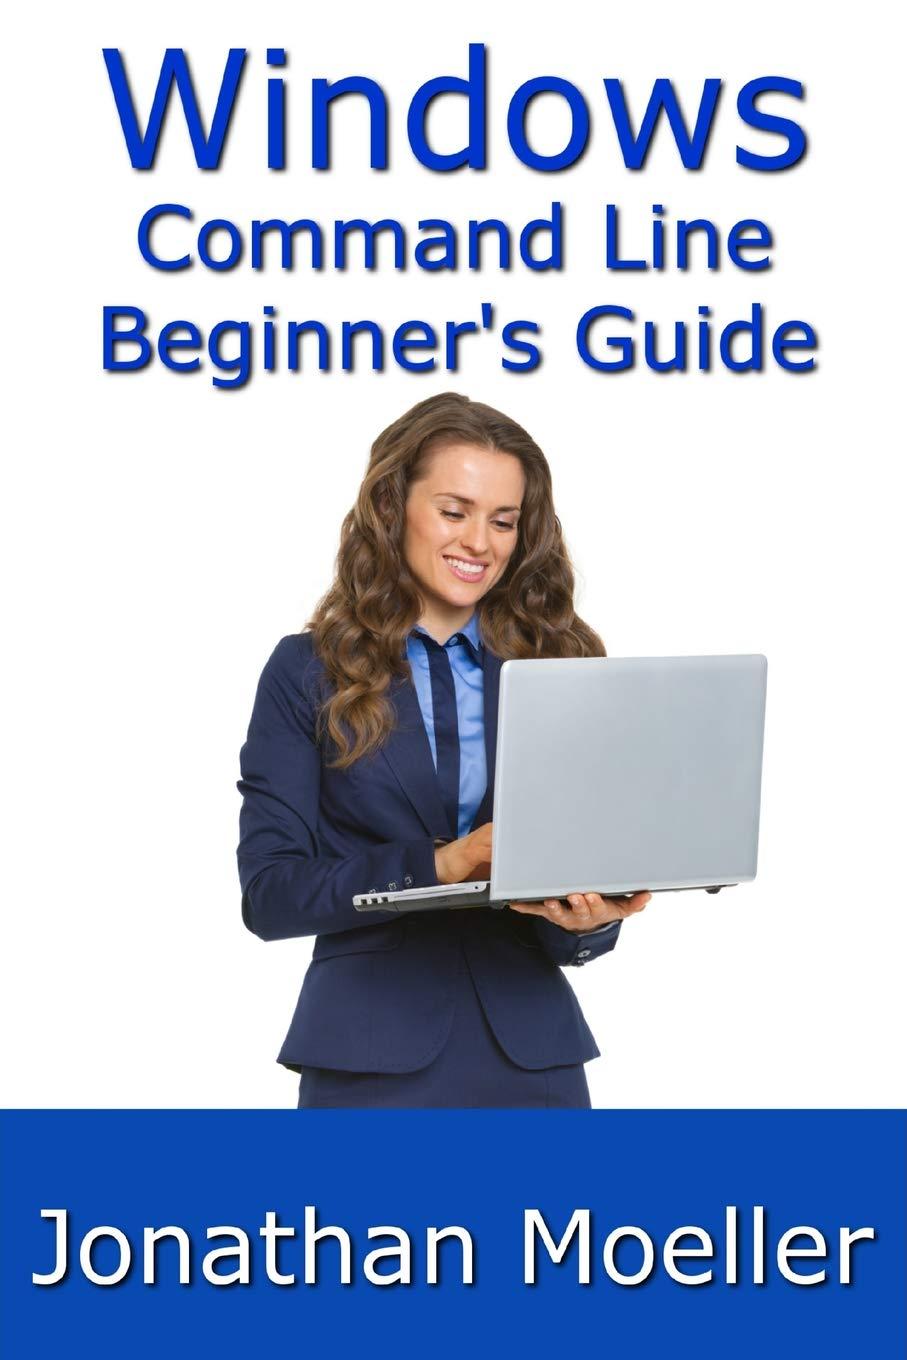 the windows command line beginner's guide 2nd edition jonathan moeller 1091574022, 978-1091574021